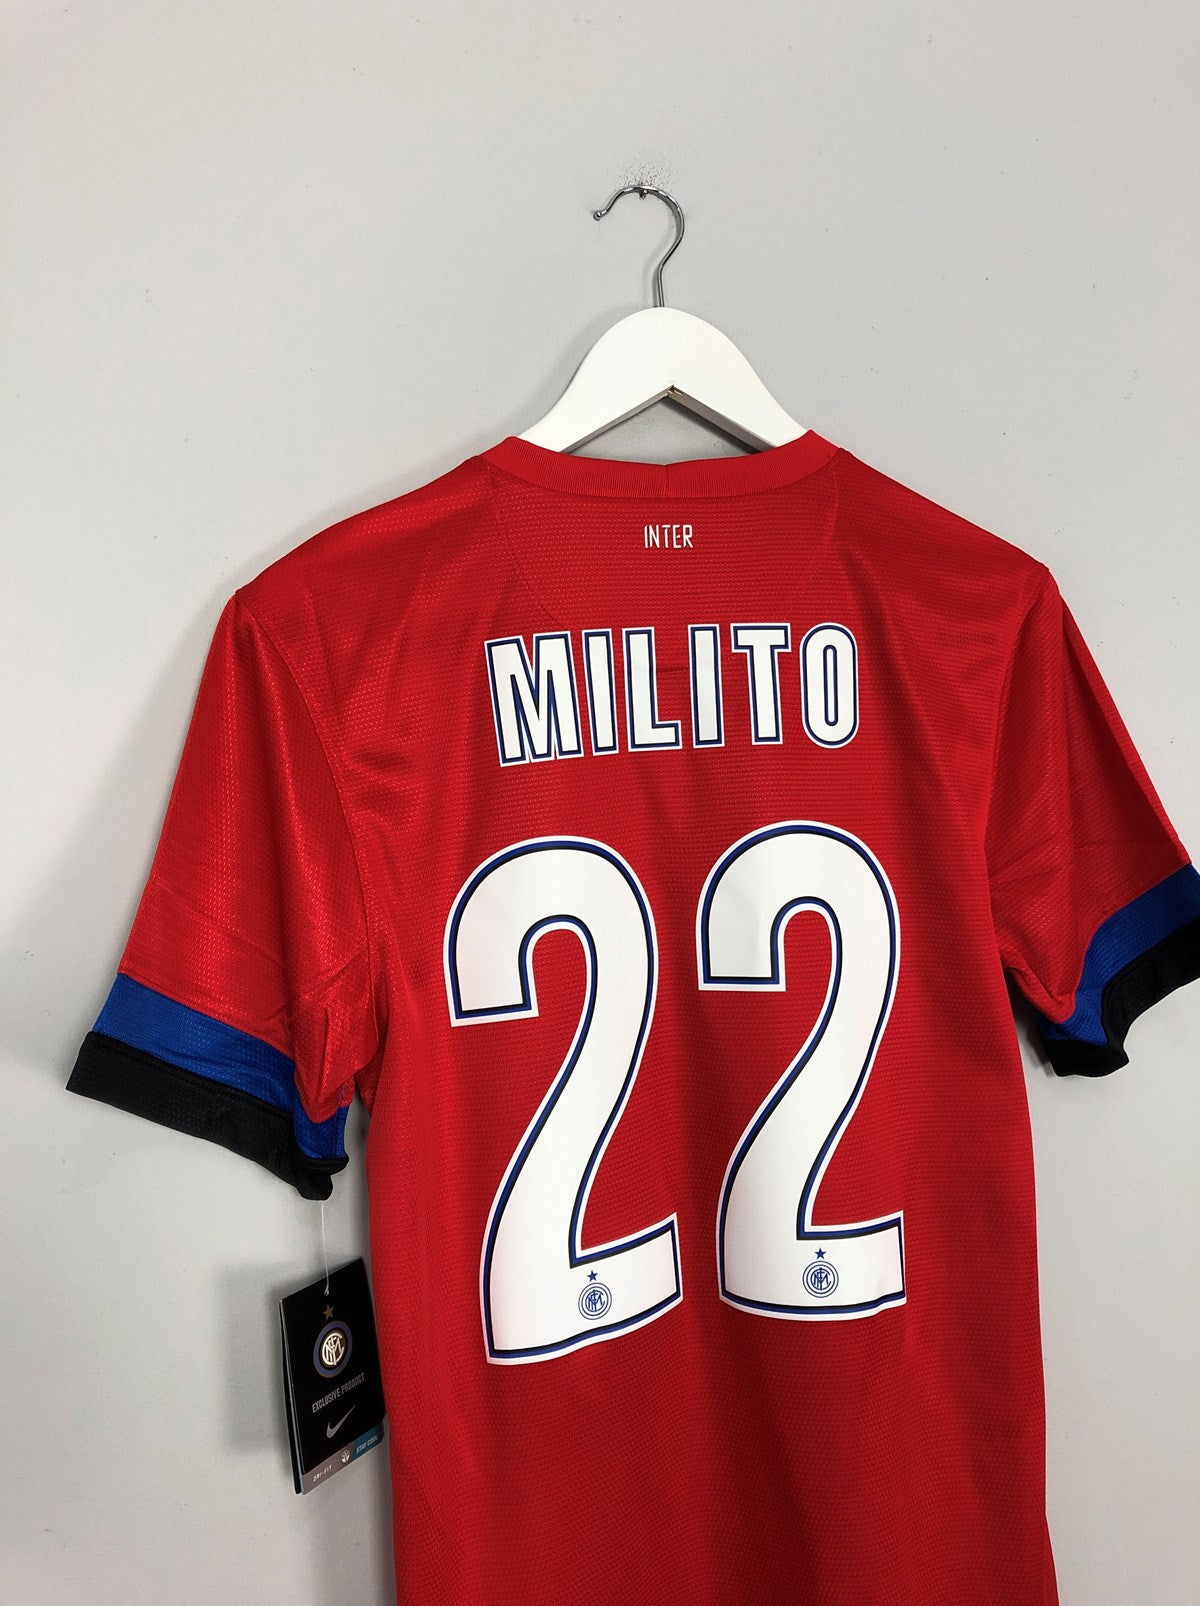 Diego Milito Inter Milan kit